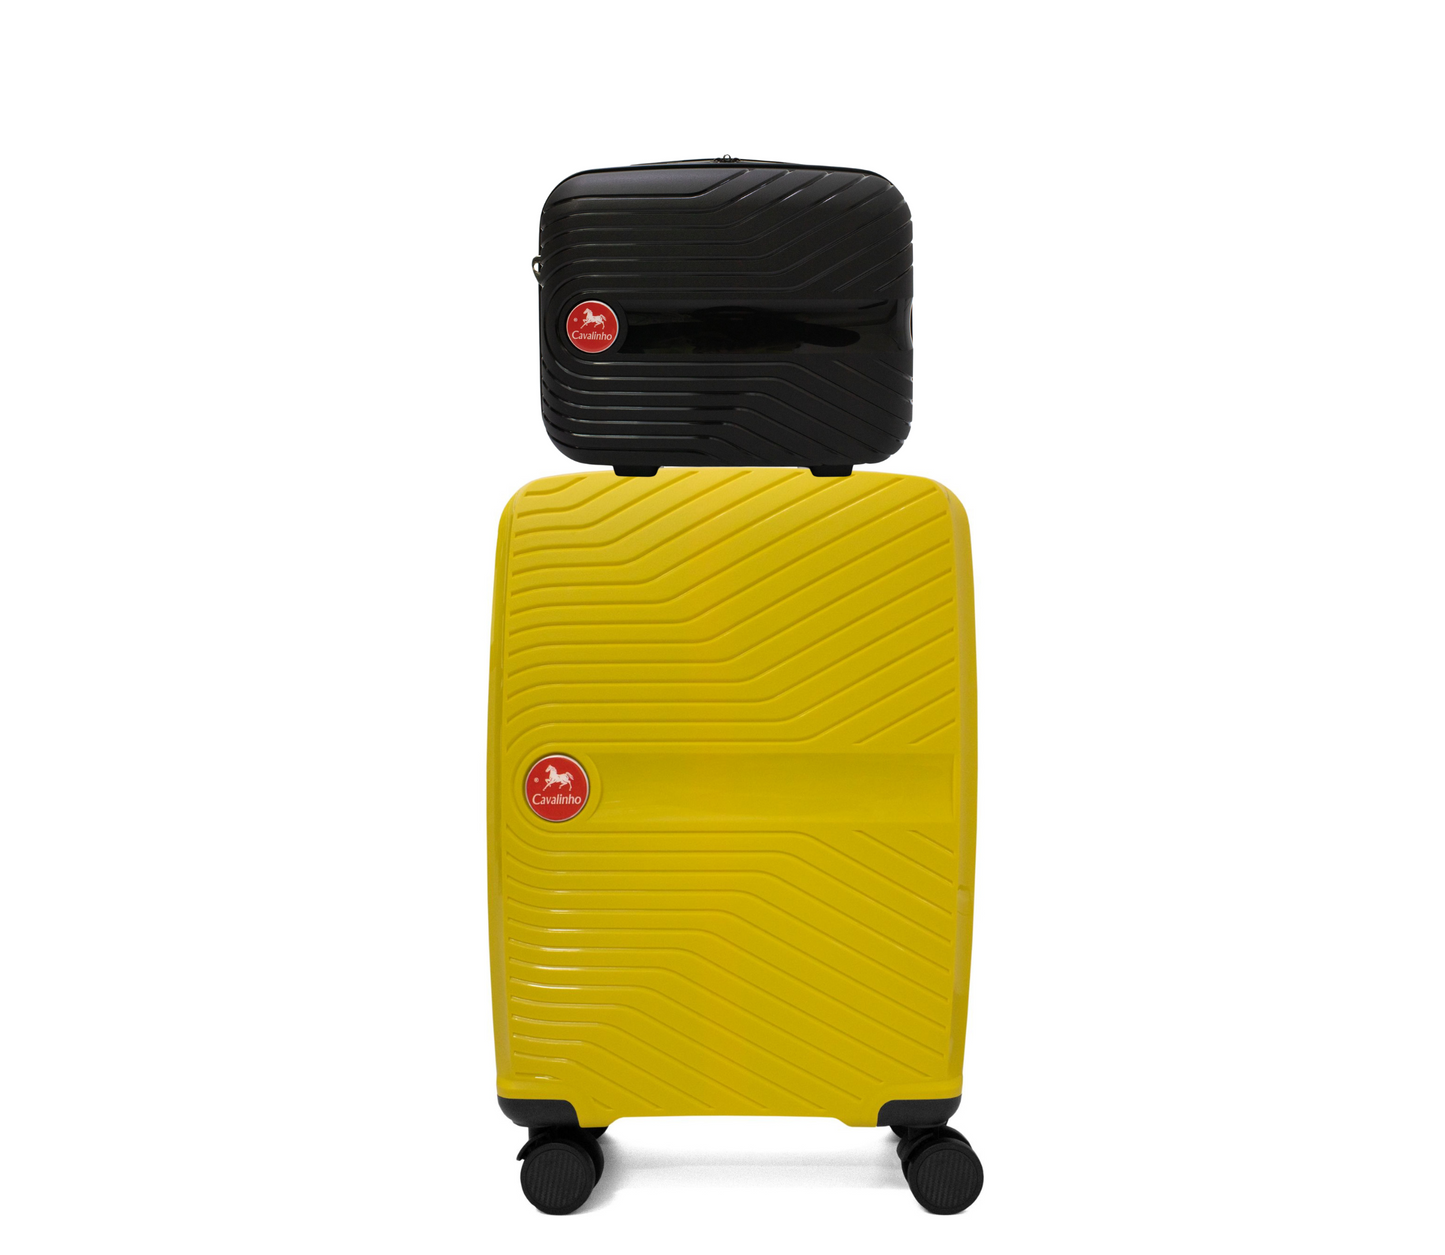 Cavalinho Canada & USA Colorful 2 Piece Luggage Set (15" & 19") - Black Yellow - 68020004.0108.S1519._1